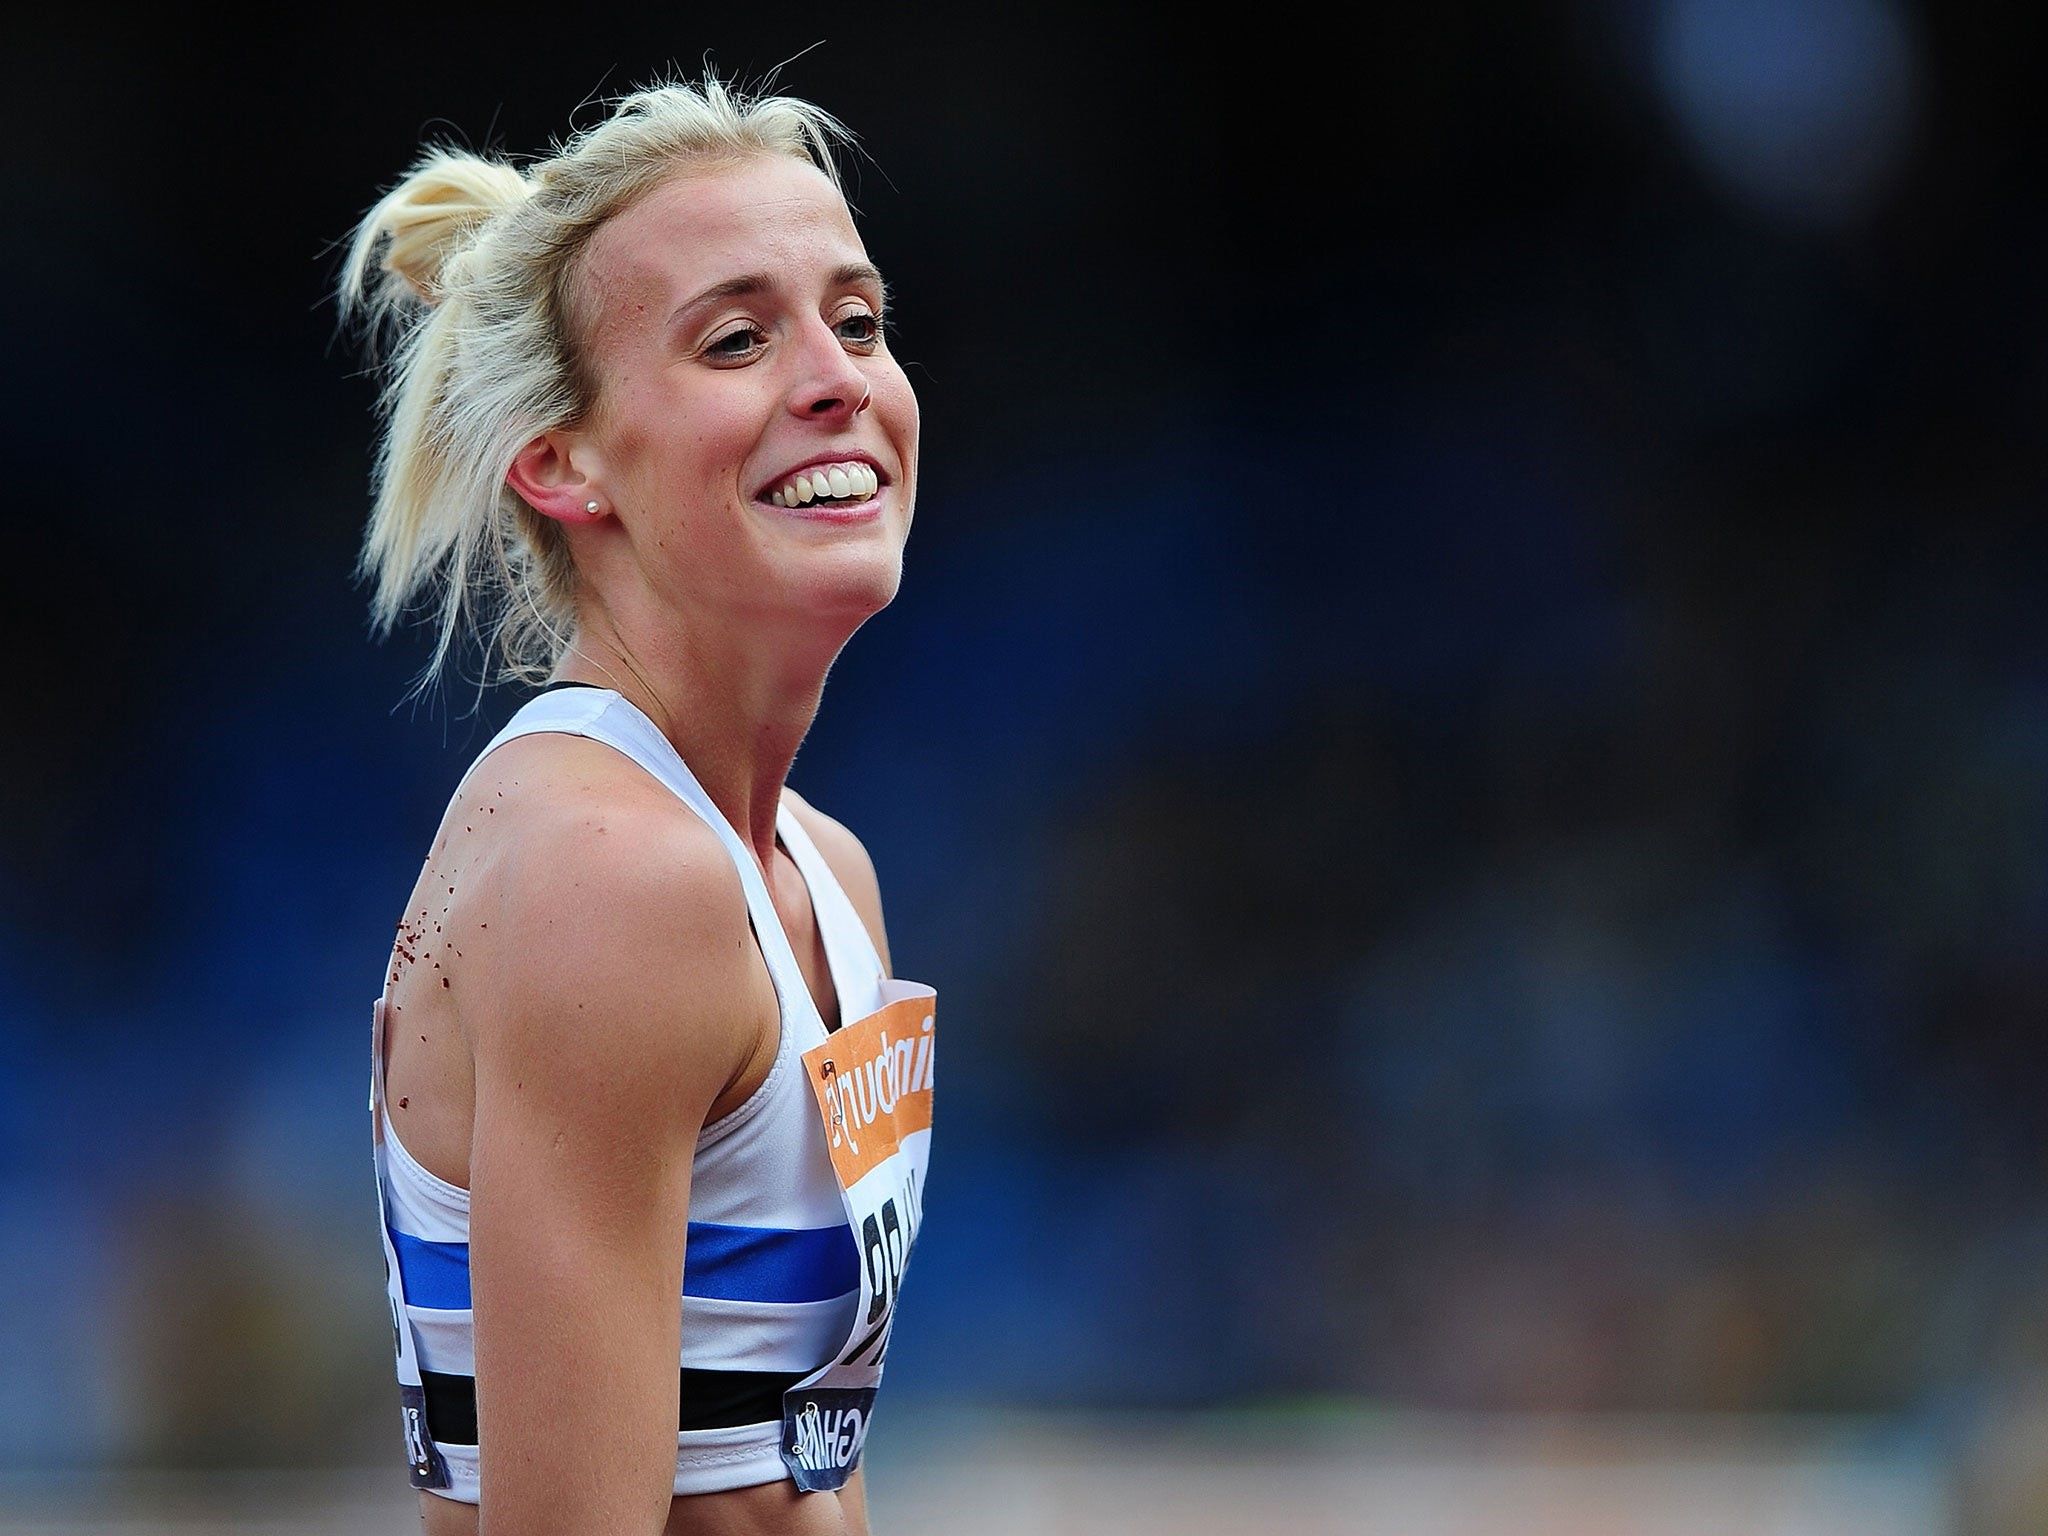 Lynsey Sharp Sets New Scottish Women's 800m Record